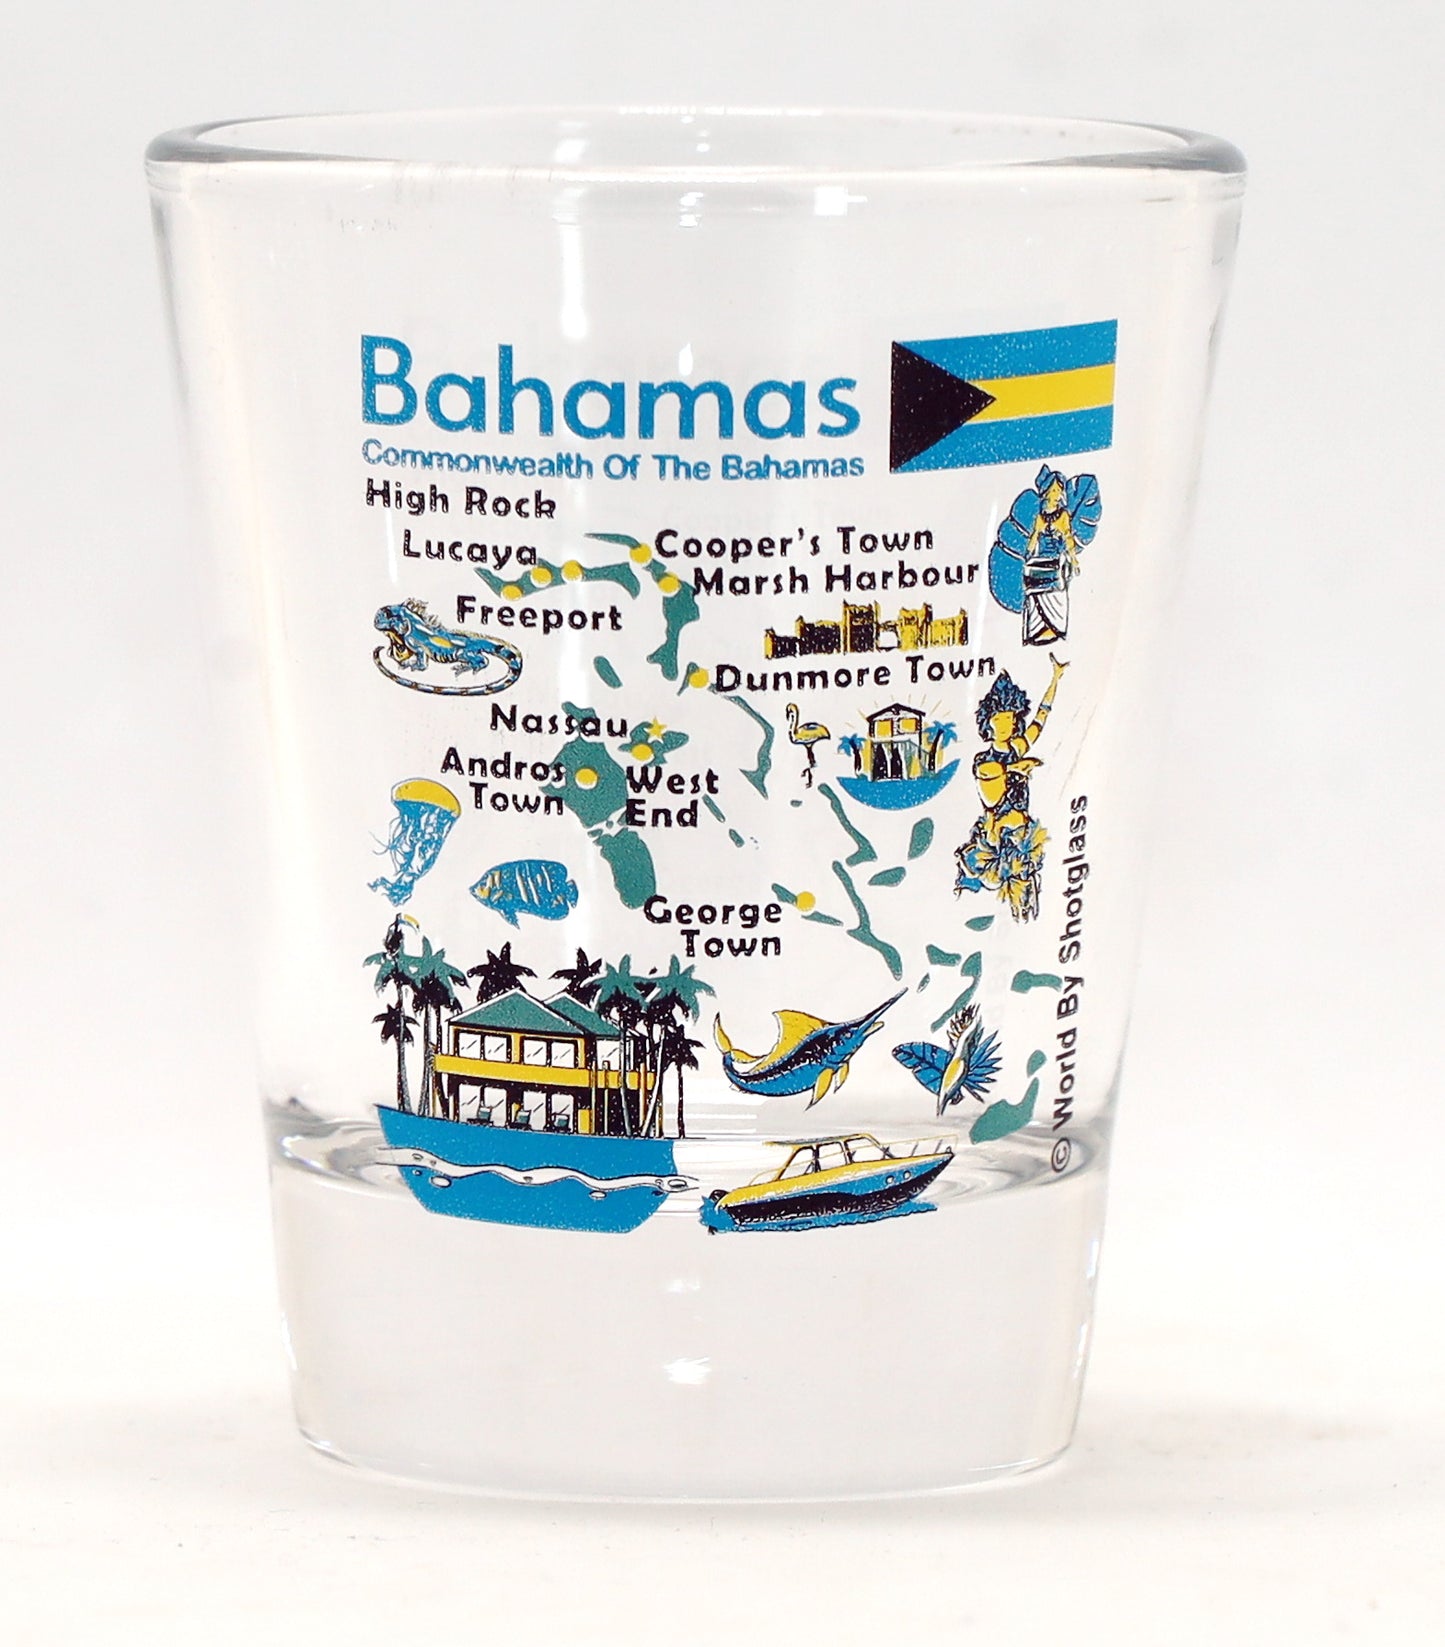 Bahamas Landmarks and Icons Collage Shot glass